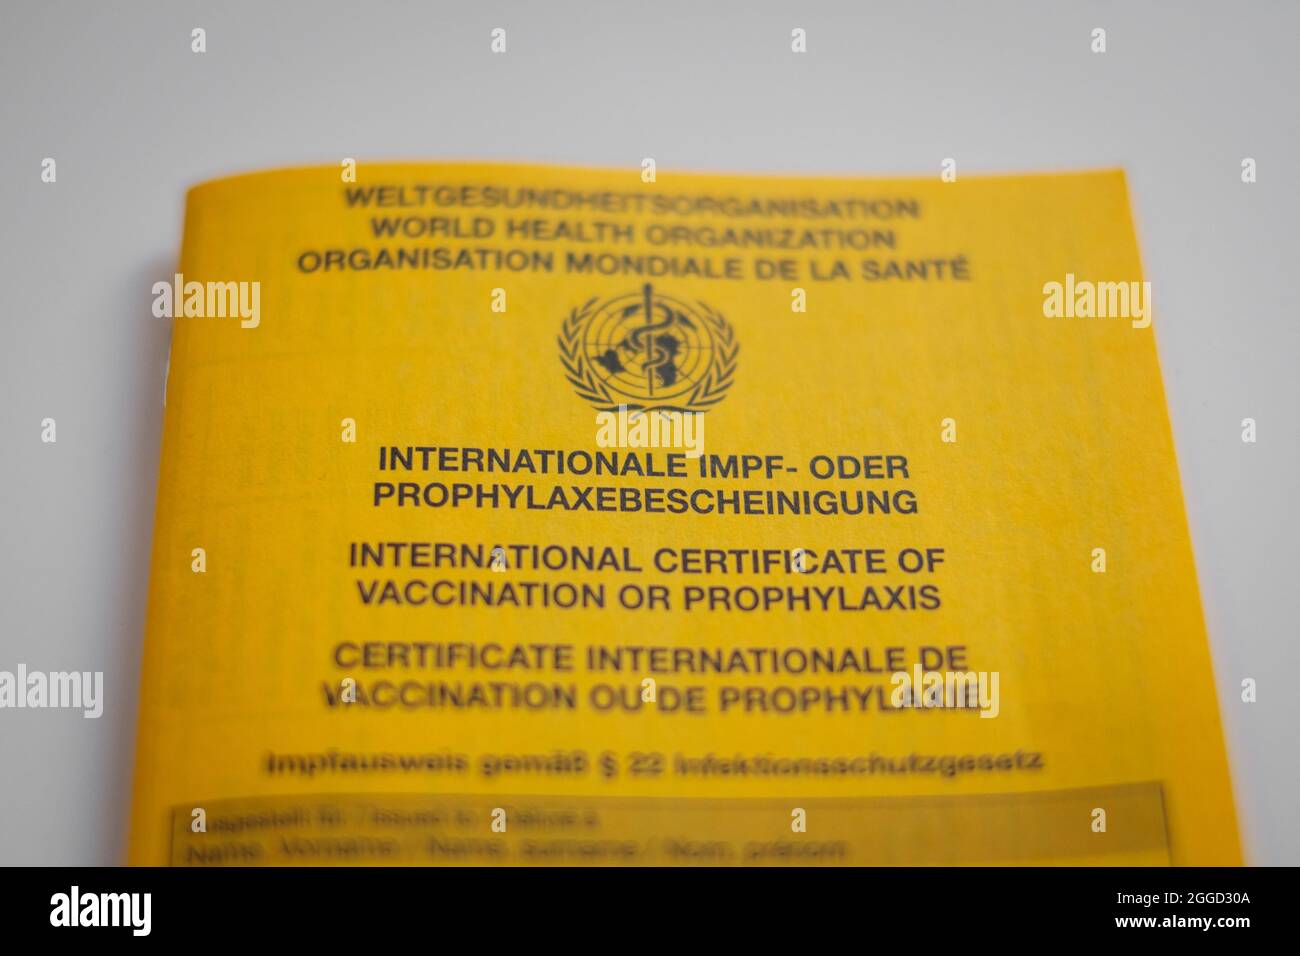 International Certificate of Vaccination - Corona vaccination pass Stock Photo